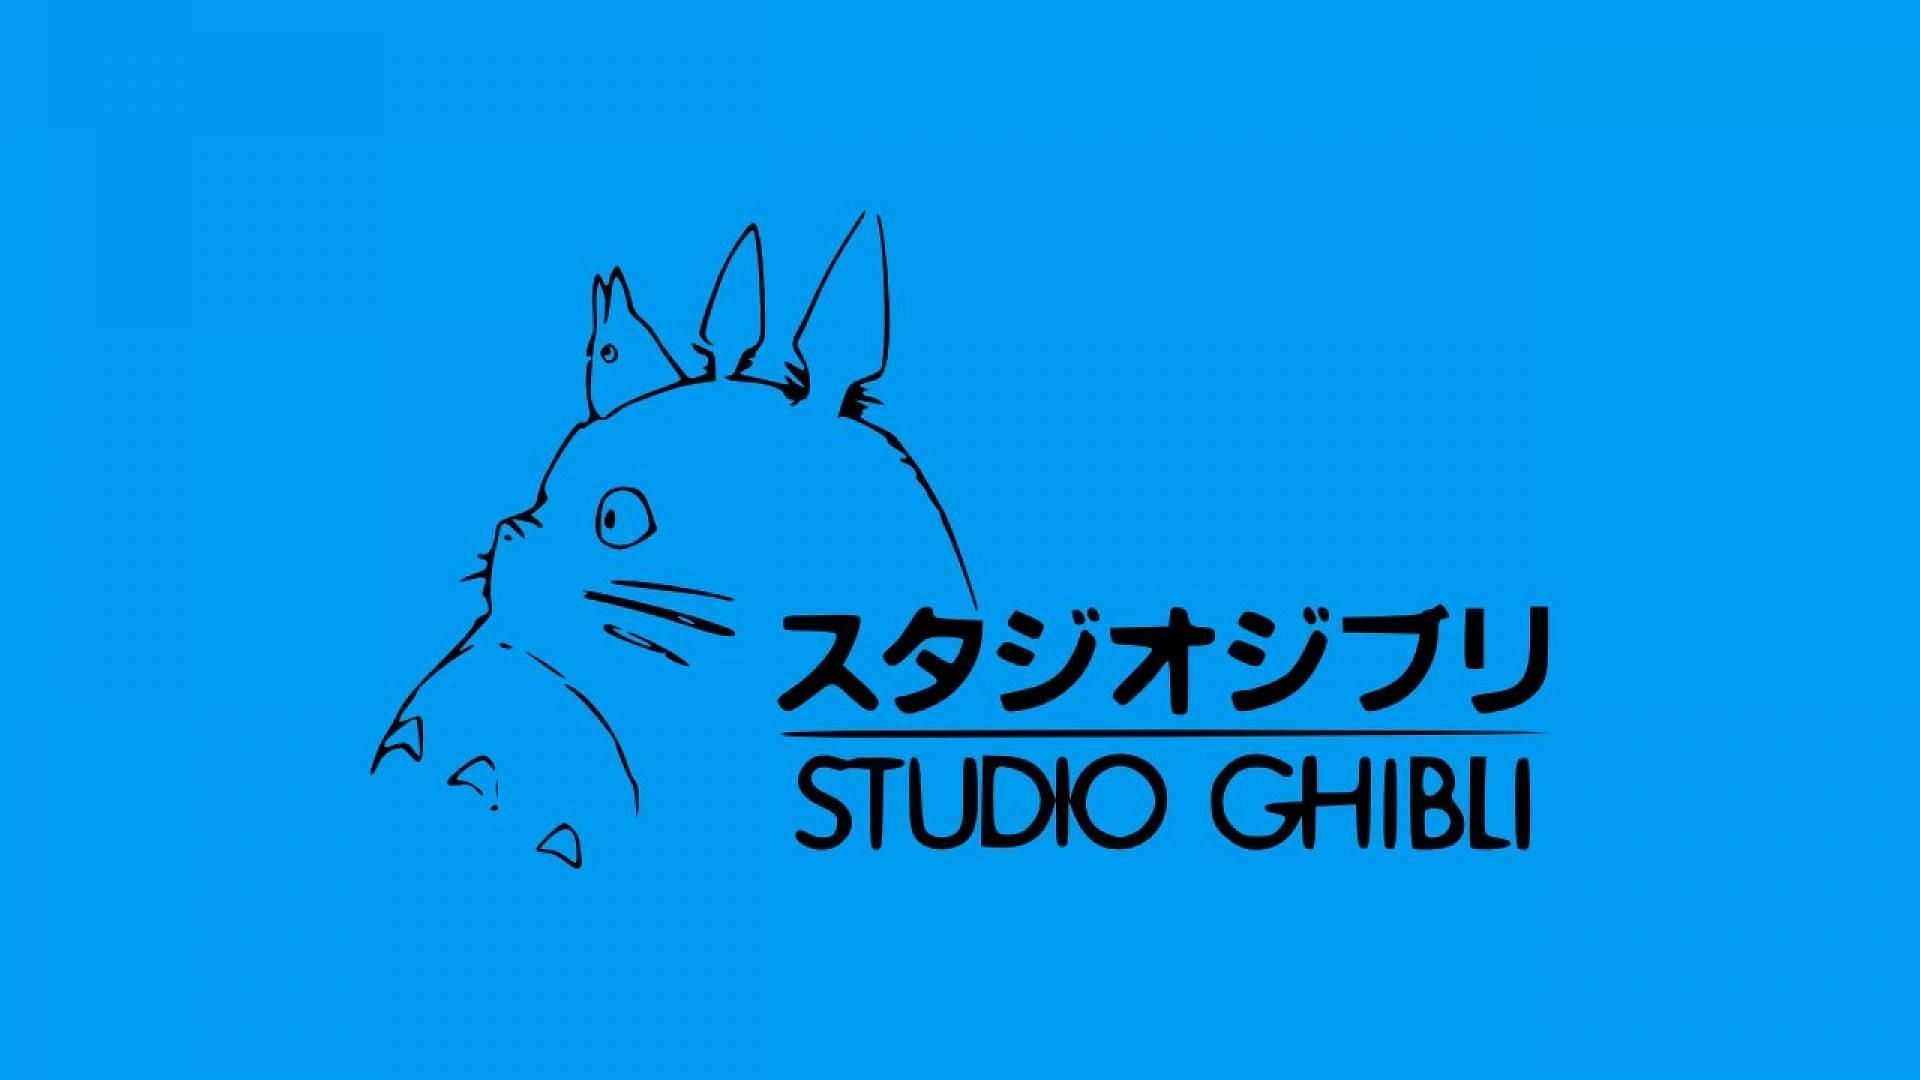 Знак гибли. Studio Ghibli студия в Японии.